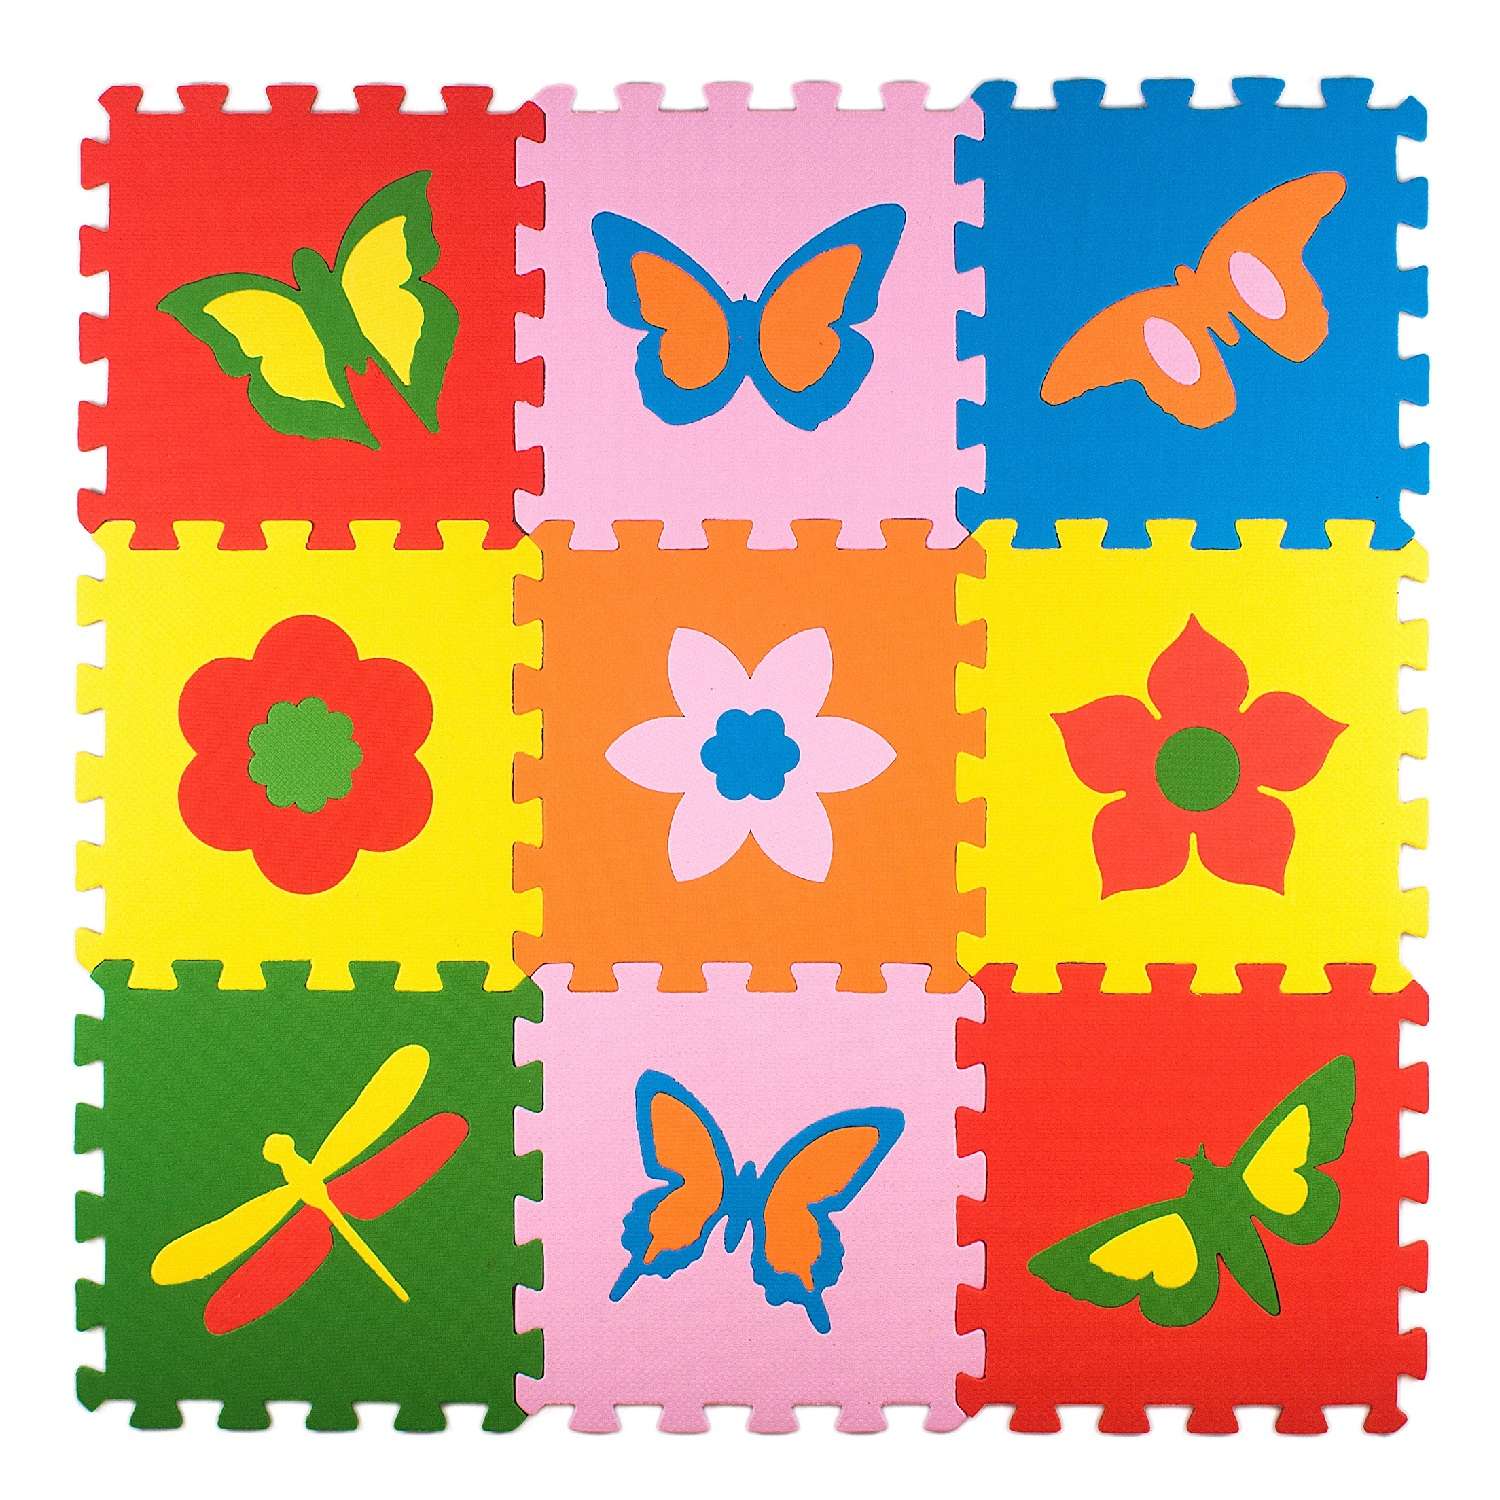 Развивающий детский коврик Eco cover мягкий пол для ползания Бабочки мультиколор 33х33 - фото 1